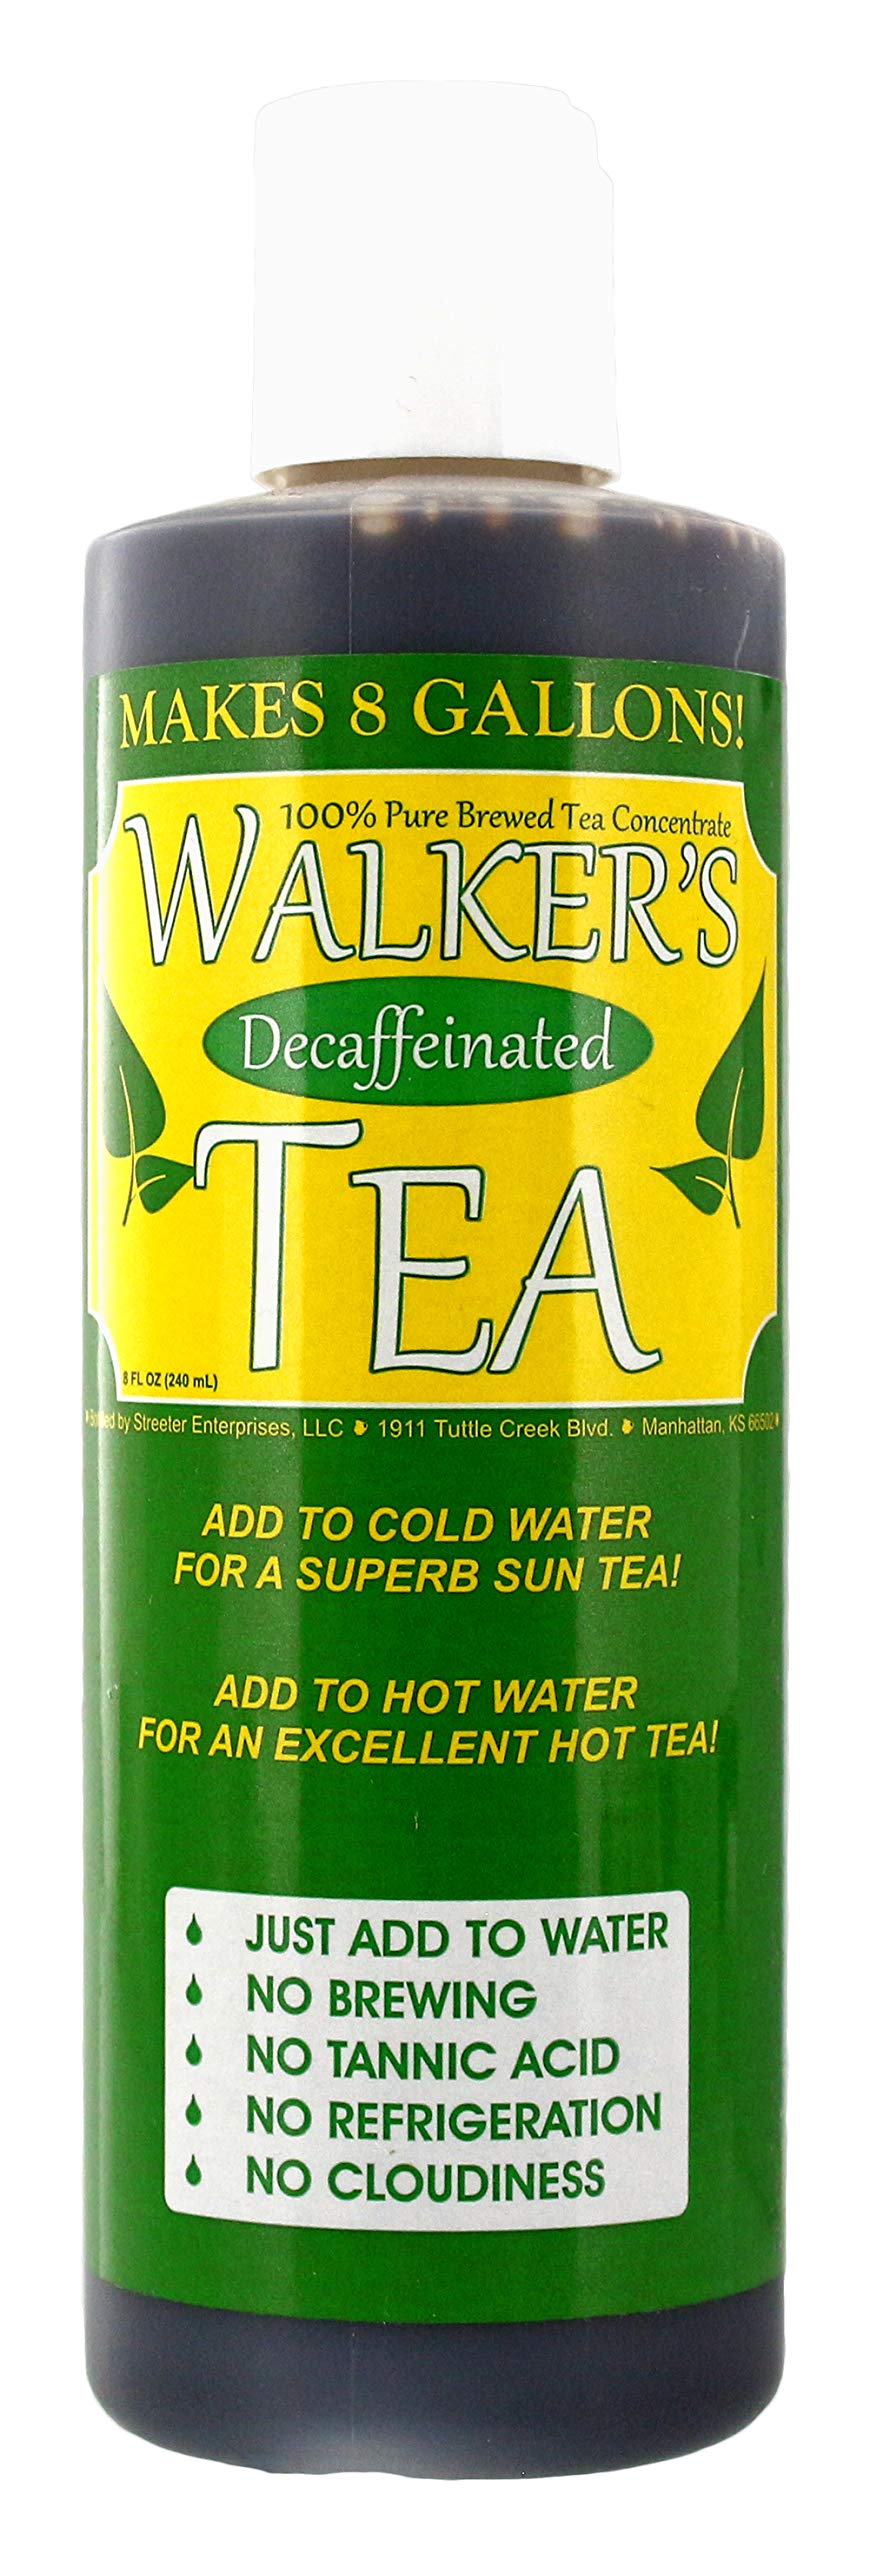 Walker's Tea Liquid Tea Concentrate Decaffeinated 8oz. - Makes 8 Gallons!